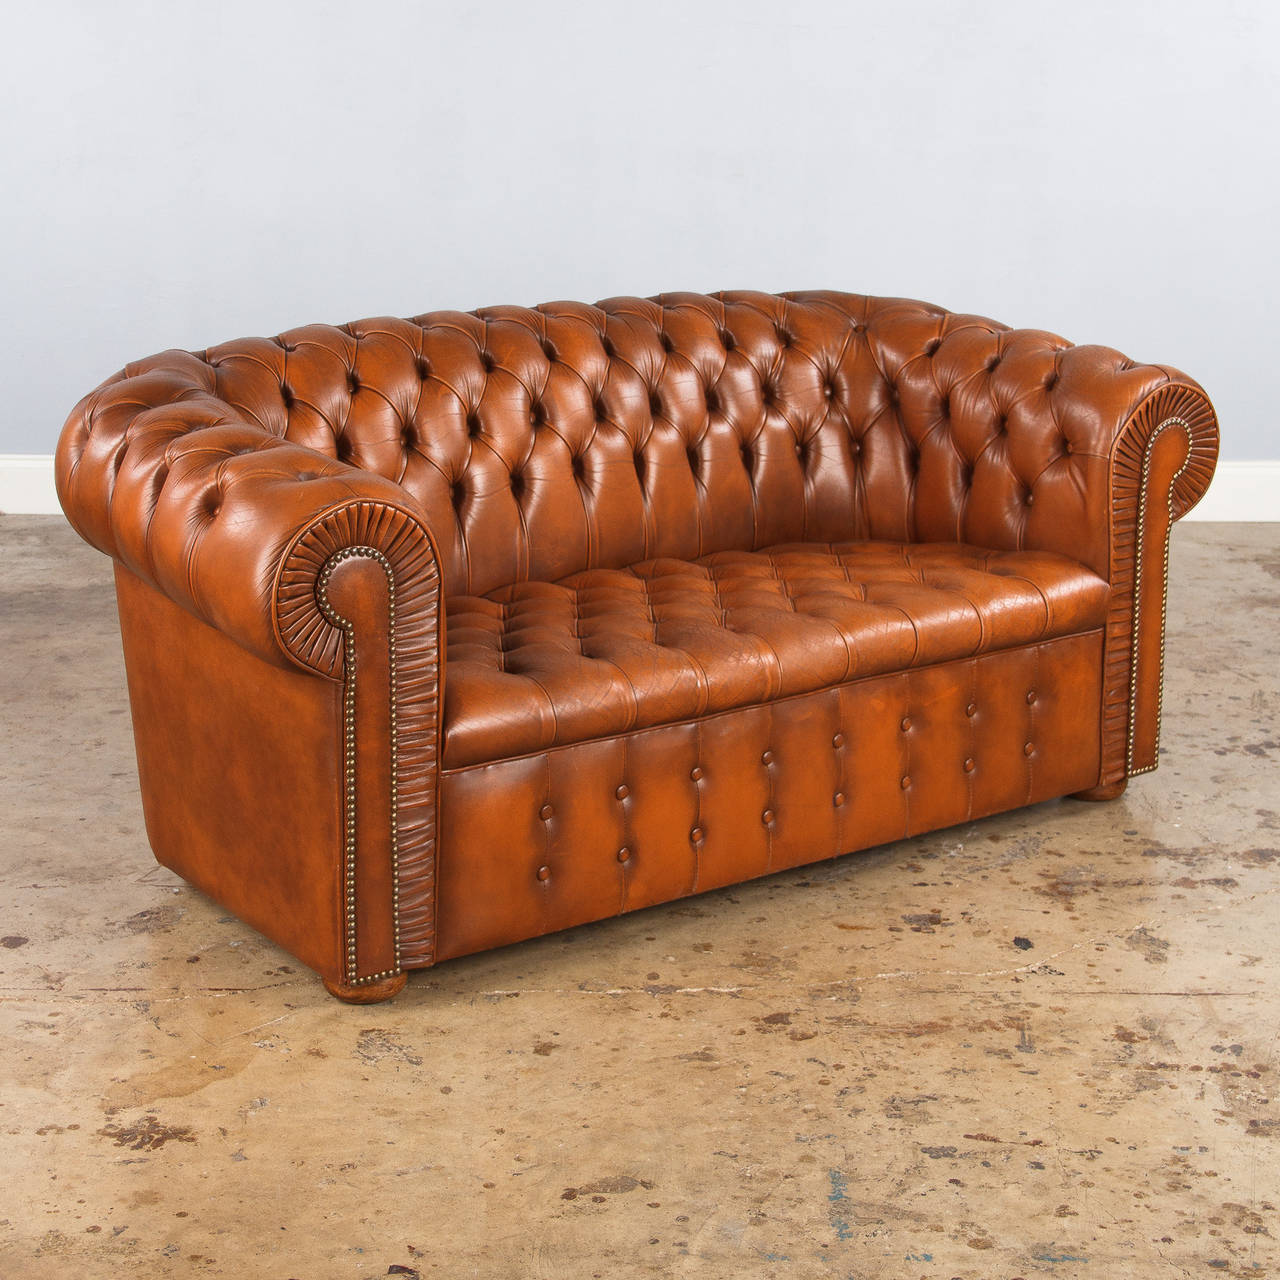 Mid-20th Century Leather Chesterfield Loveseat Sofa, circa 1940s